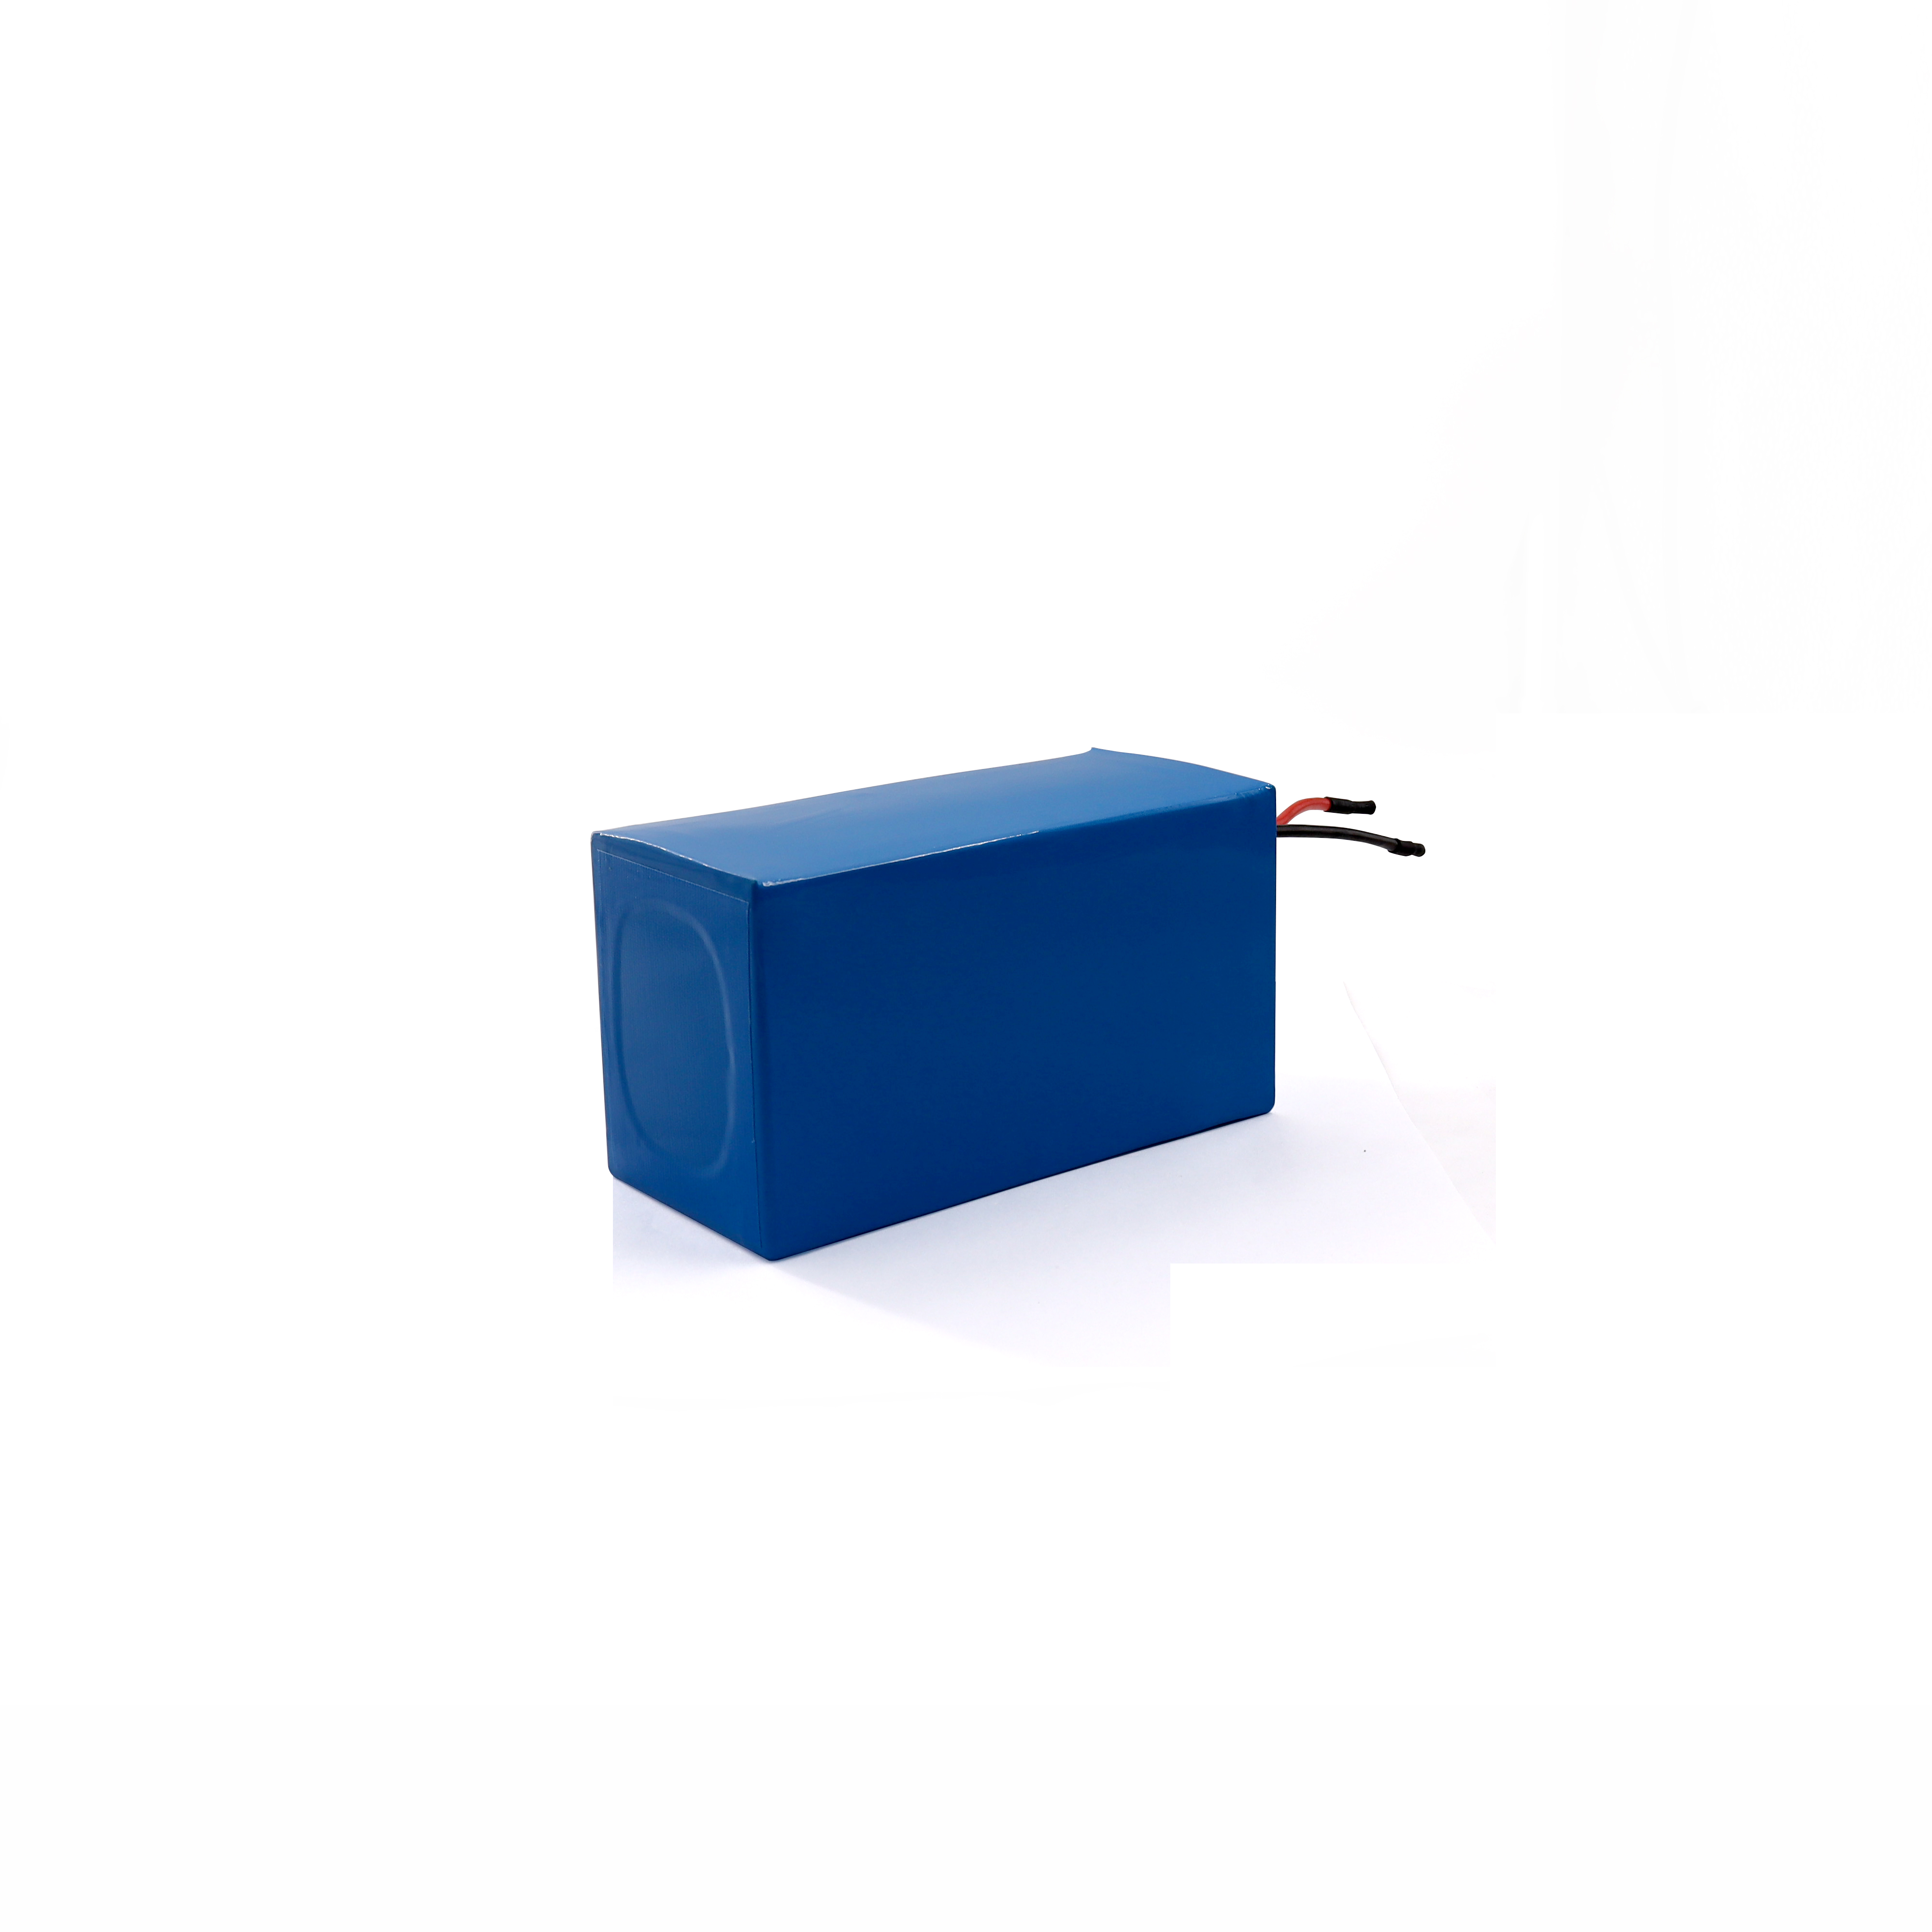 Almacenamiento de alto voltaje 25.2V 10AH Batería de litio recargable